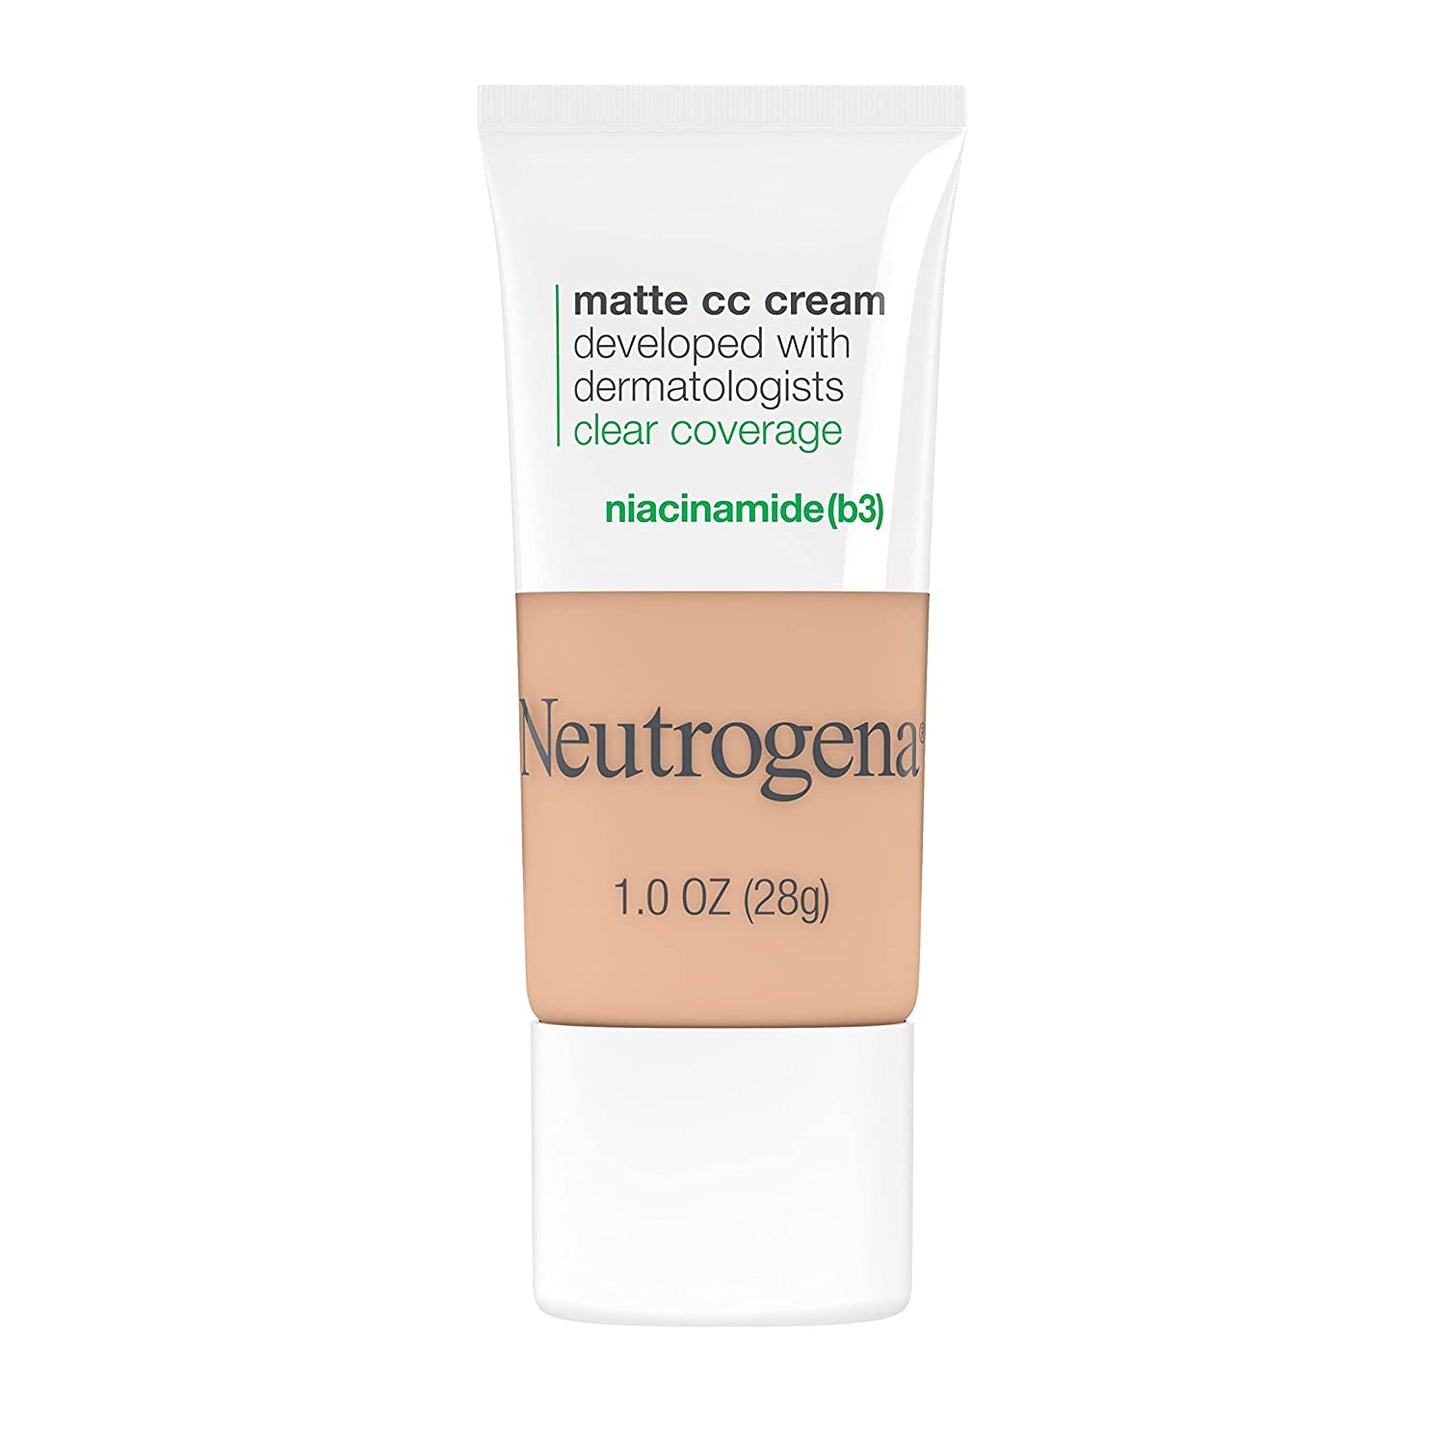 Neutrogena CC Cream 1.0 oz/ 28g